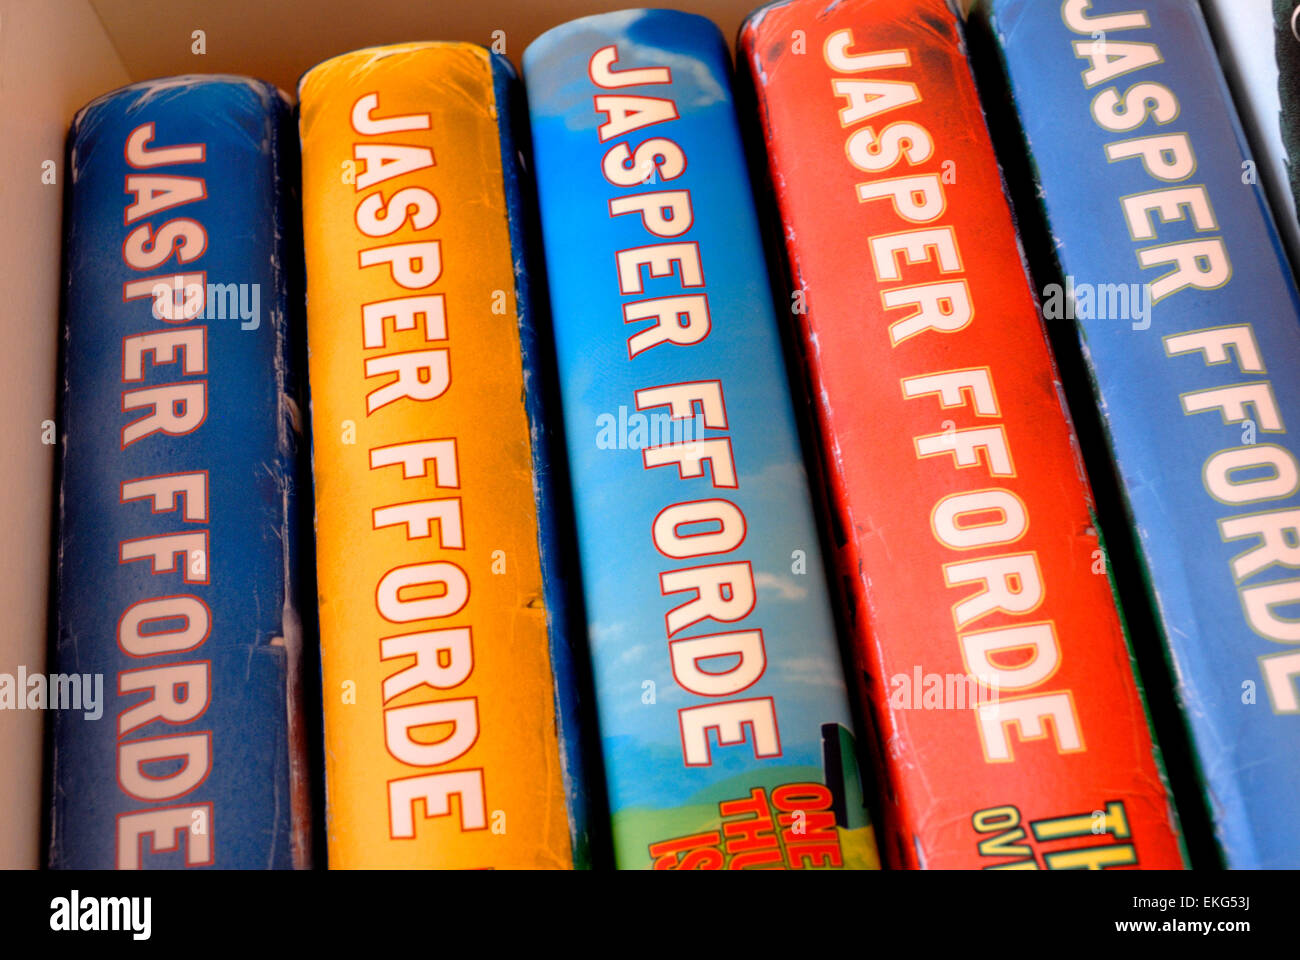 Hardback Jasper Fforde books on a bookshelf Stock Photo